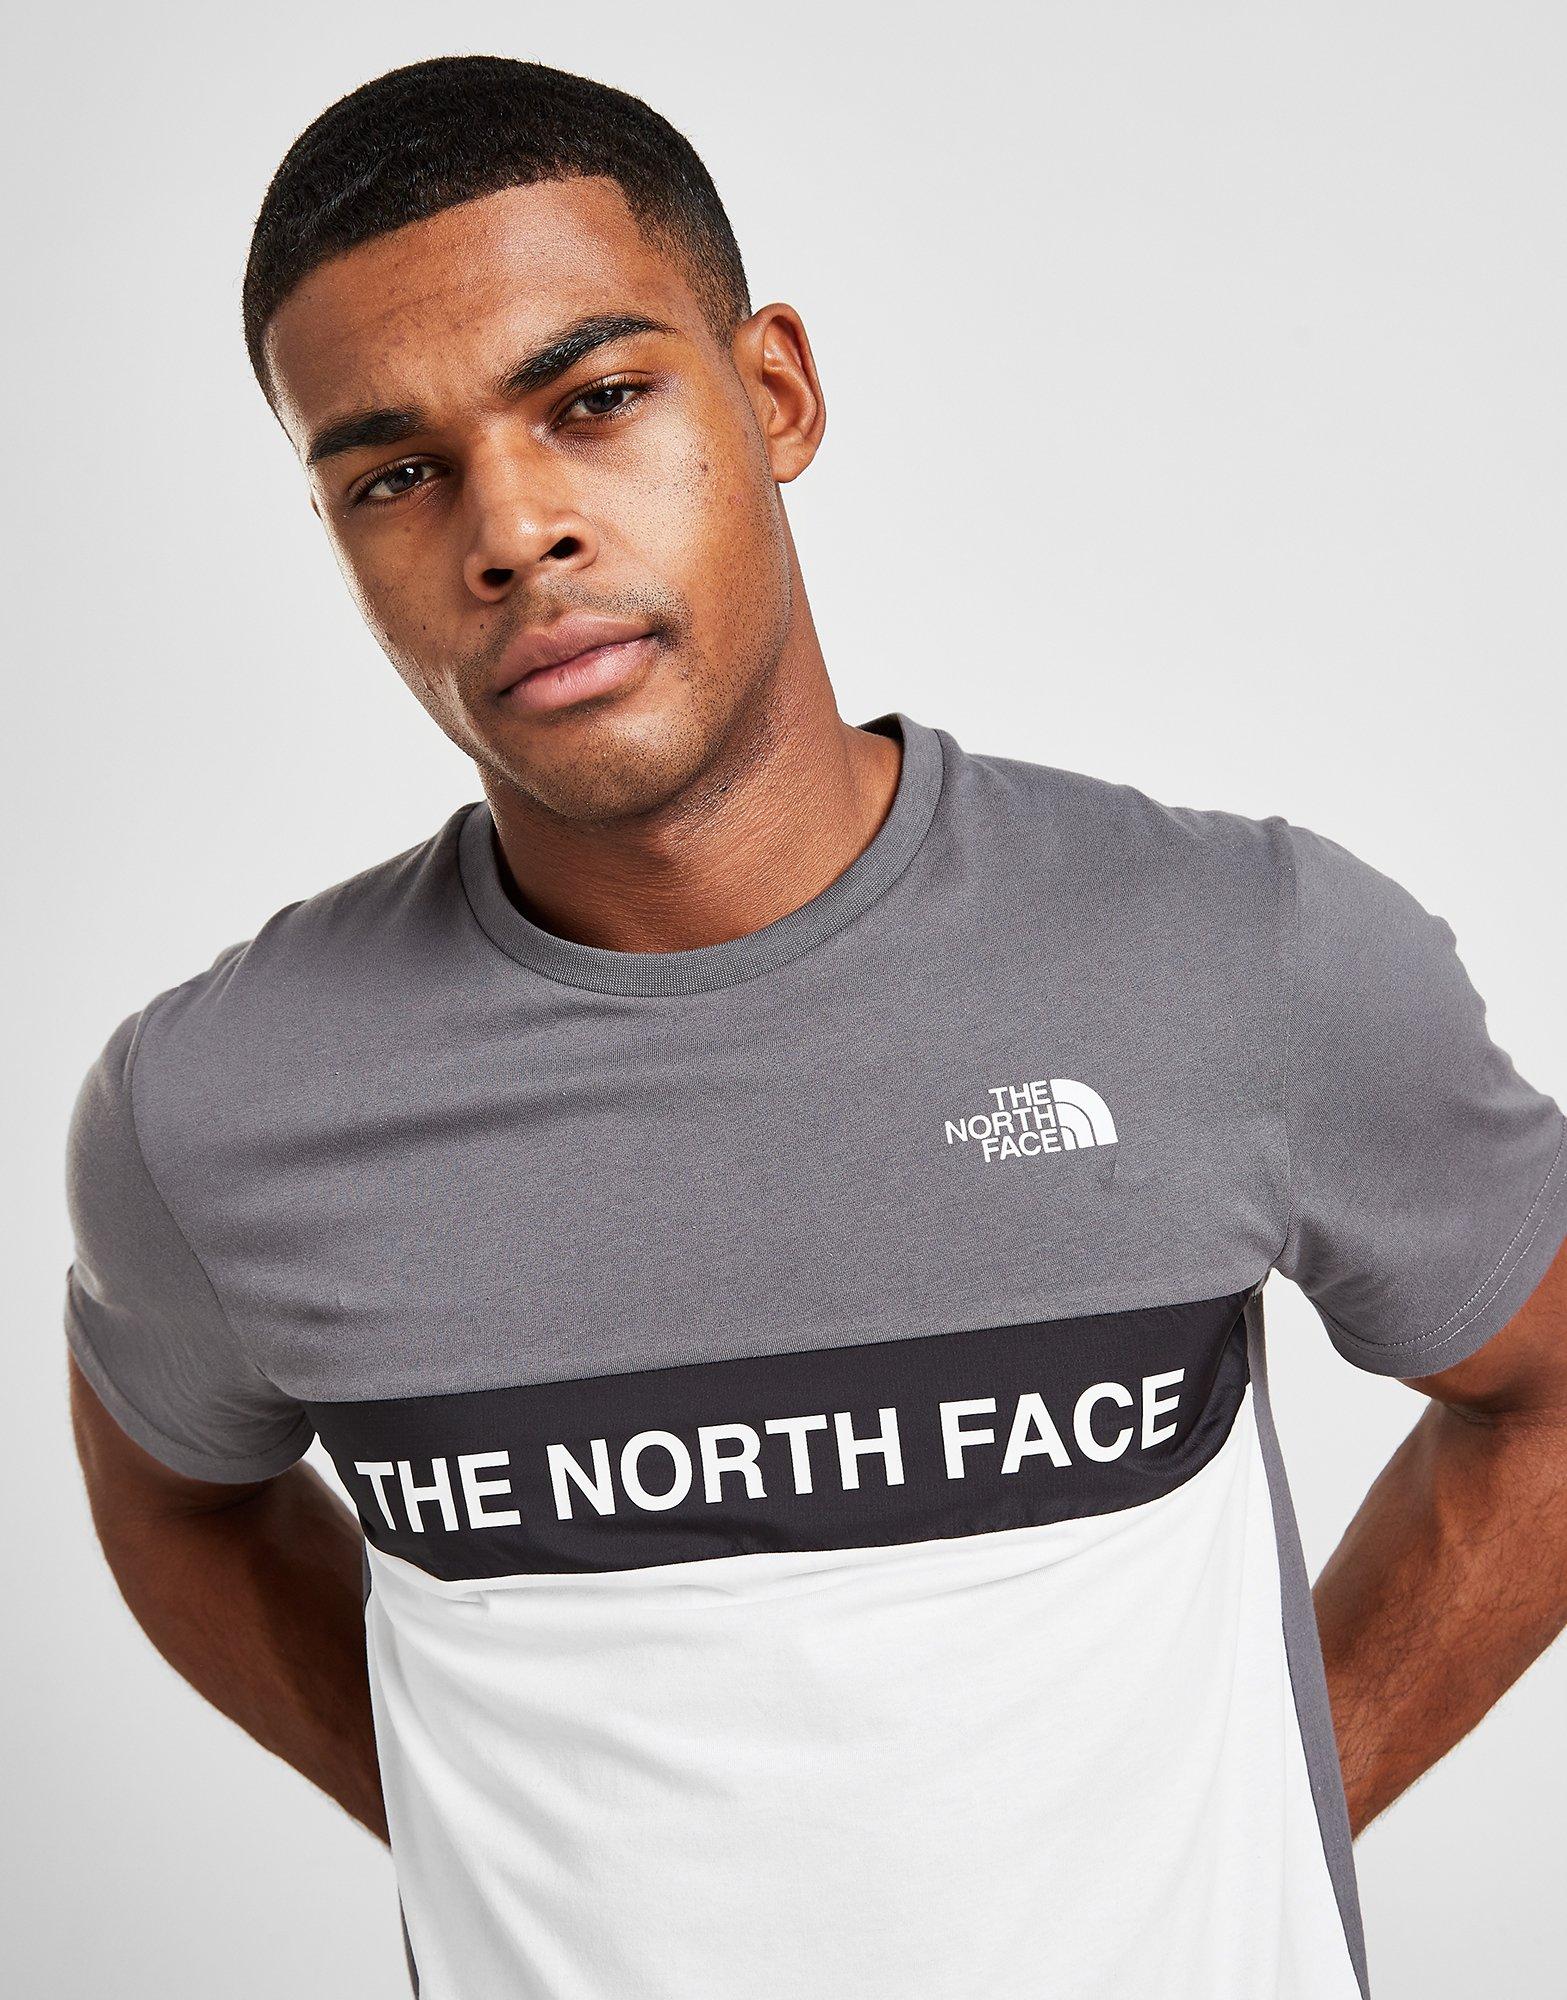 north face t shirt jd sports